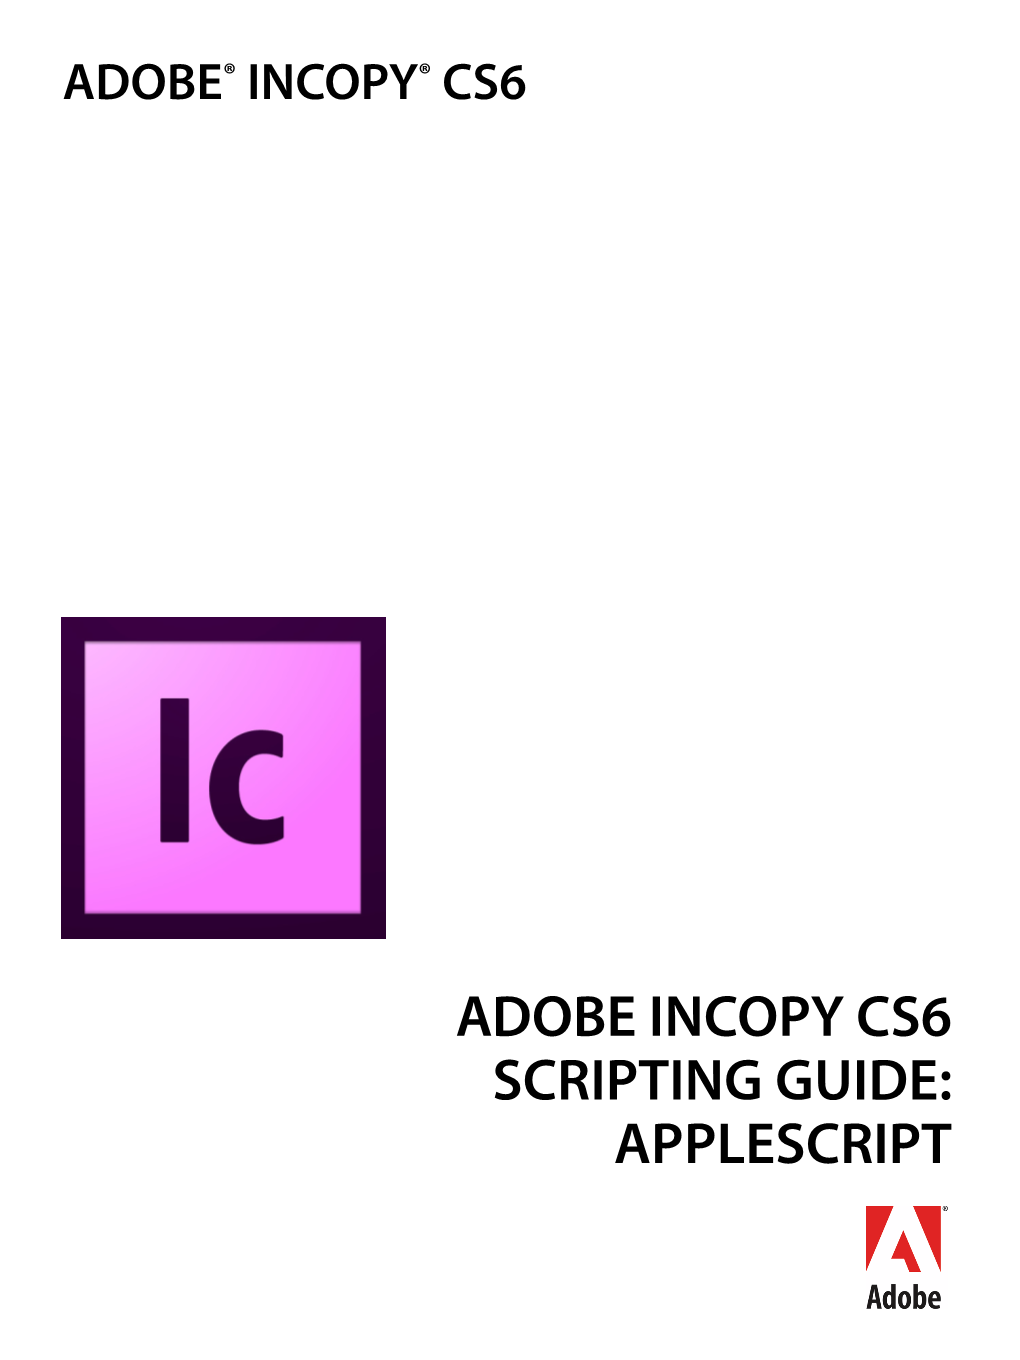 Adobe Incopy CS6 Applescript Scripting Guide